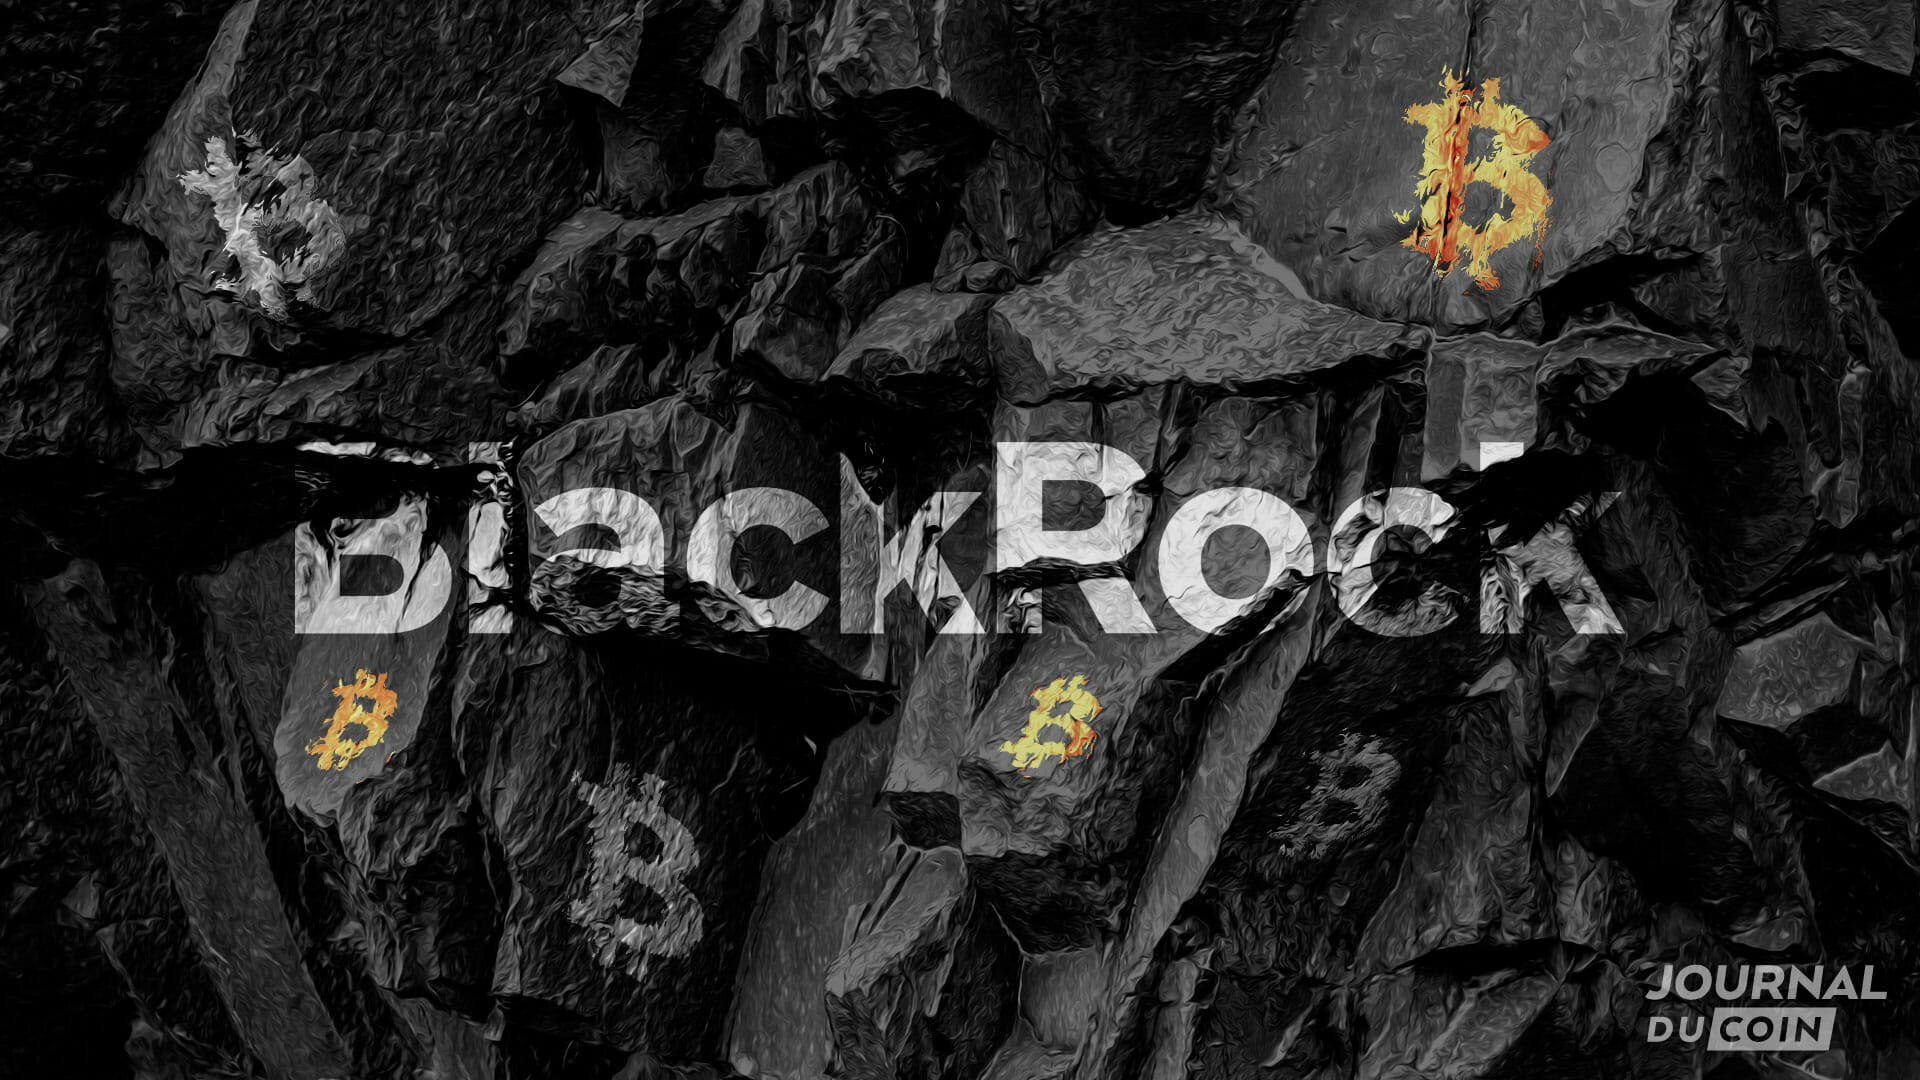 BlackRock and Bitcoin